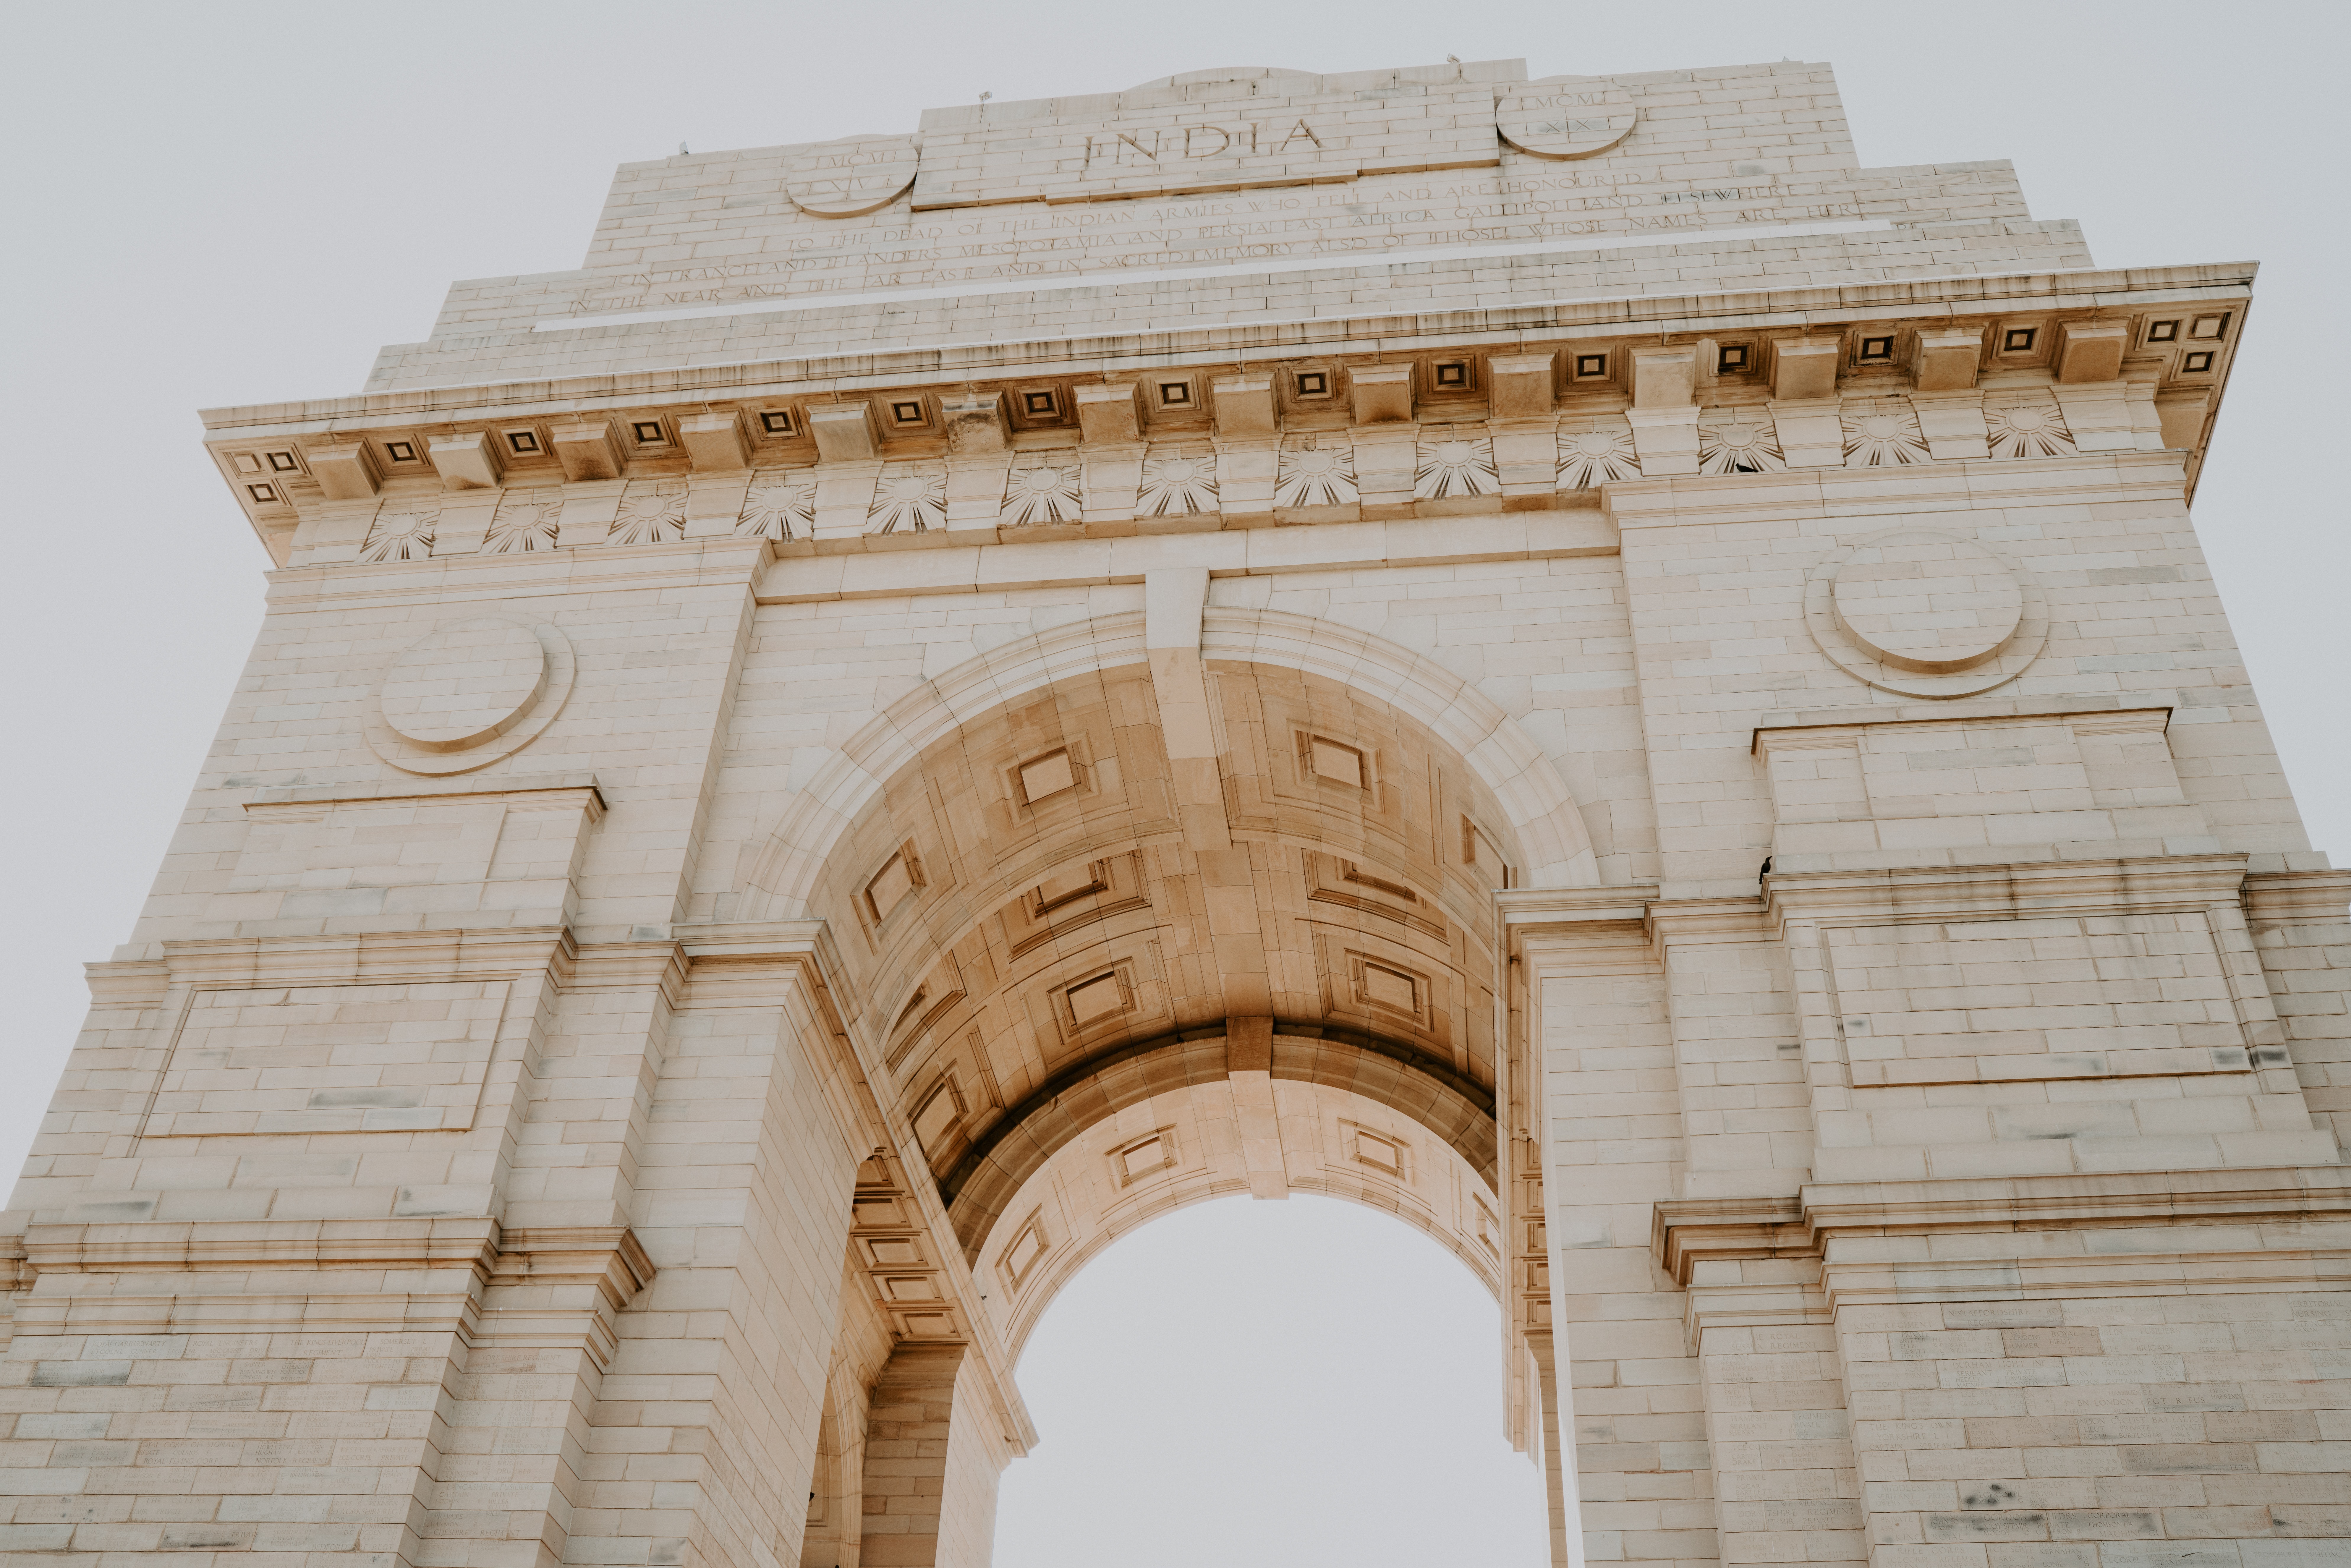 The Gateway of India Mumbai Photo by Annie Spratt